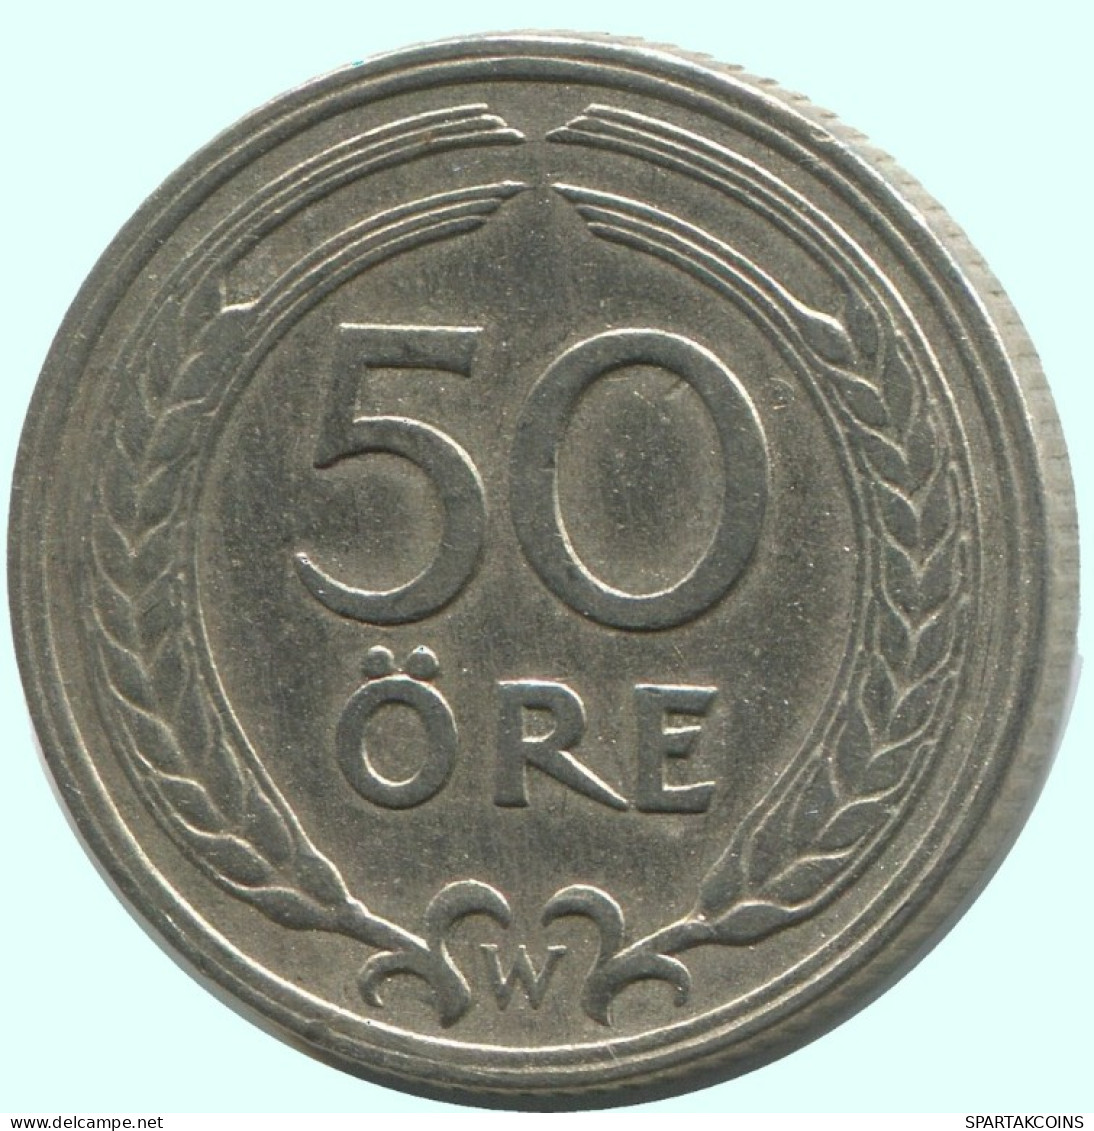 50 ORE 1920 SWEDEN Coin #AC691.2.U.A - Sweden